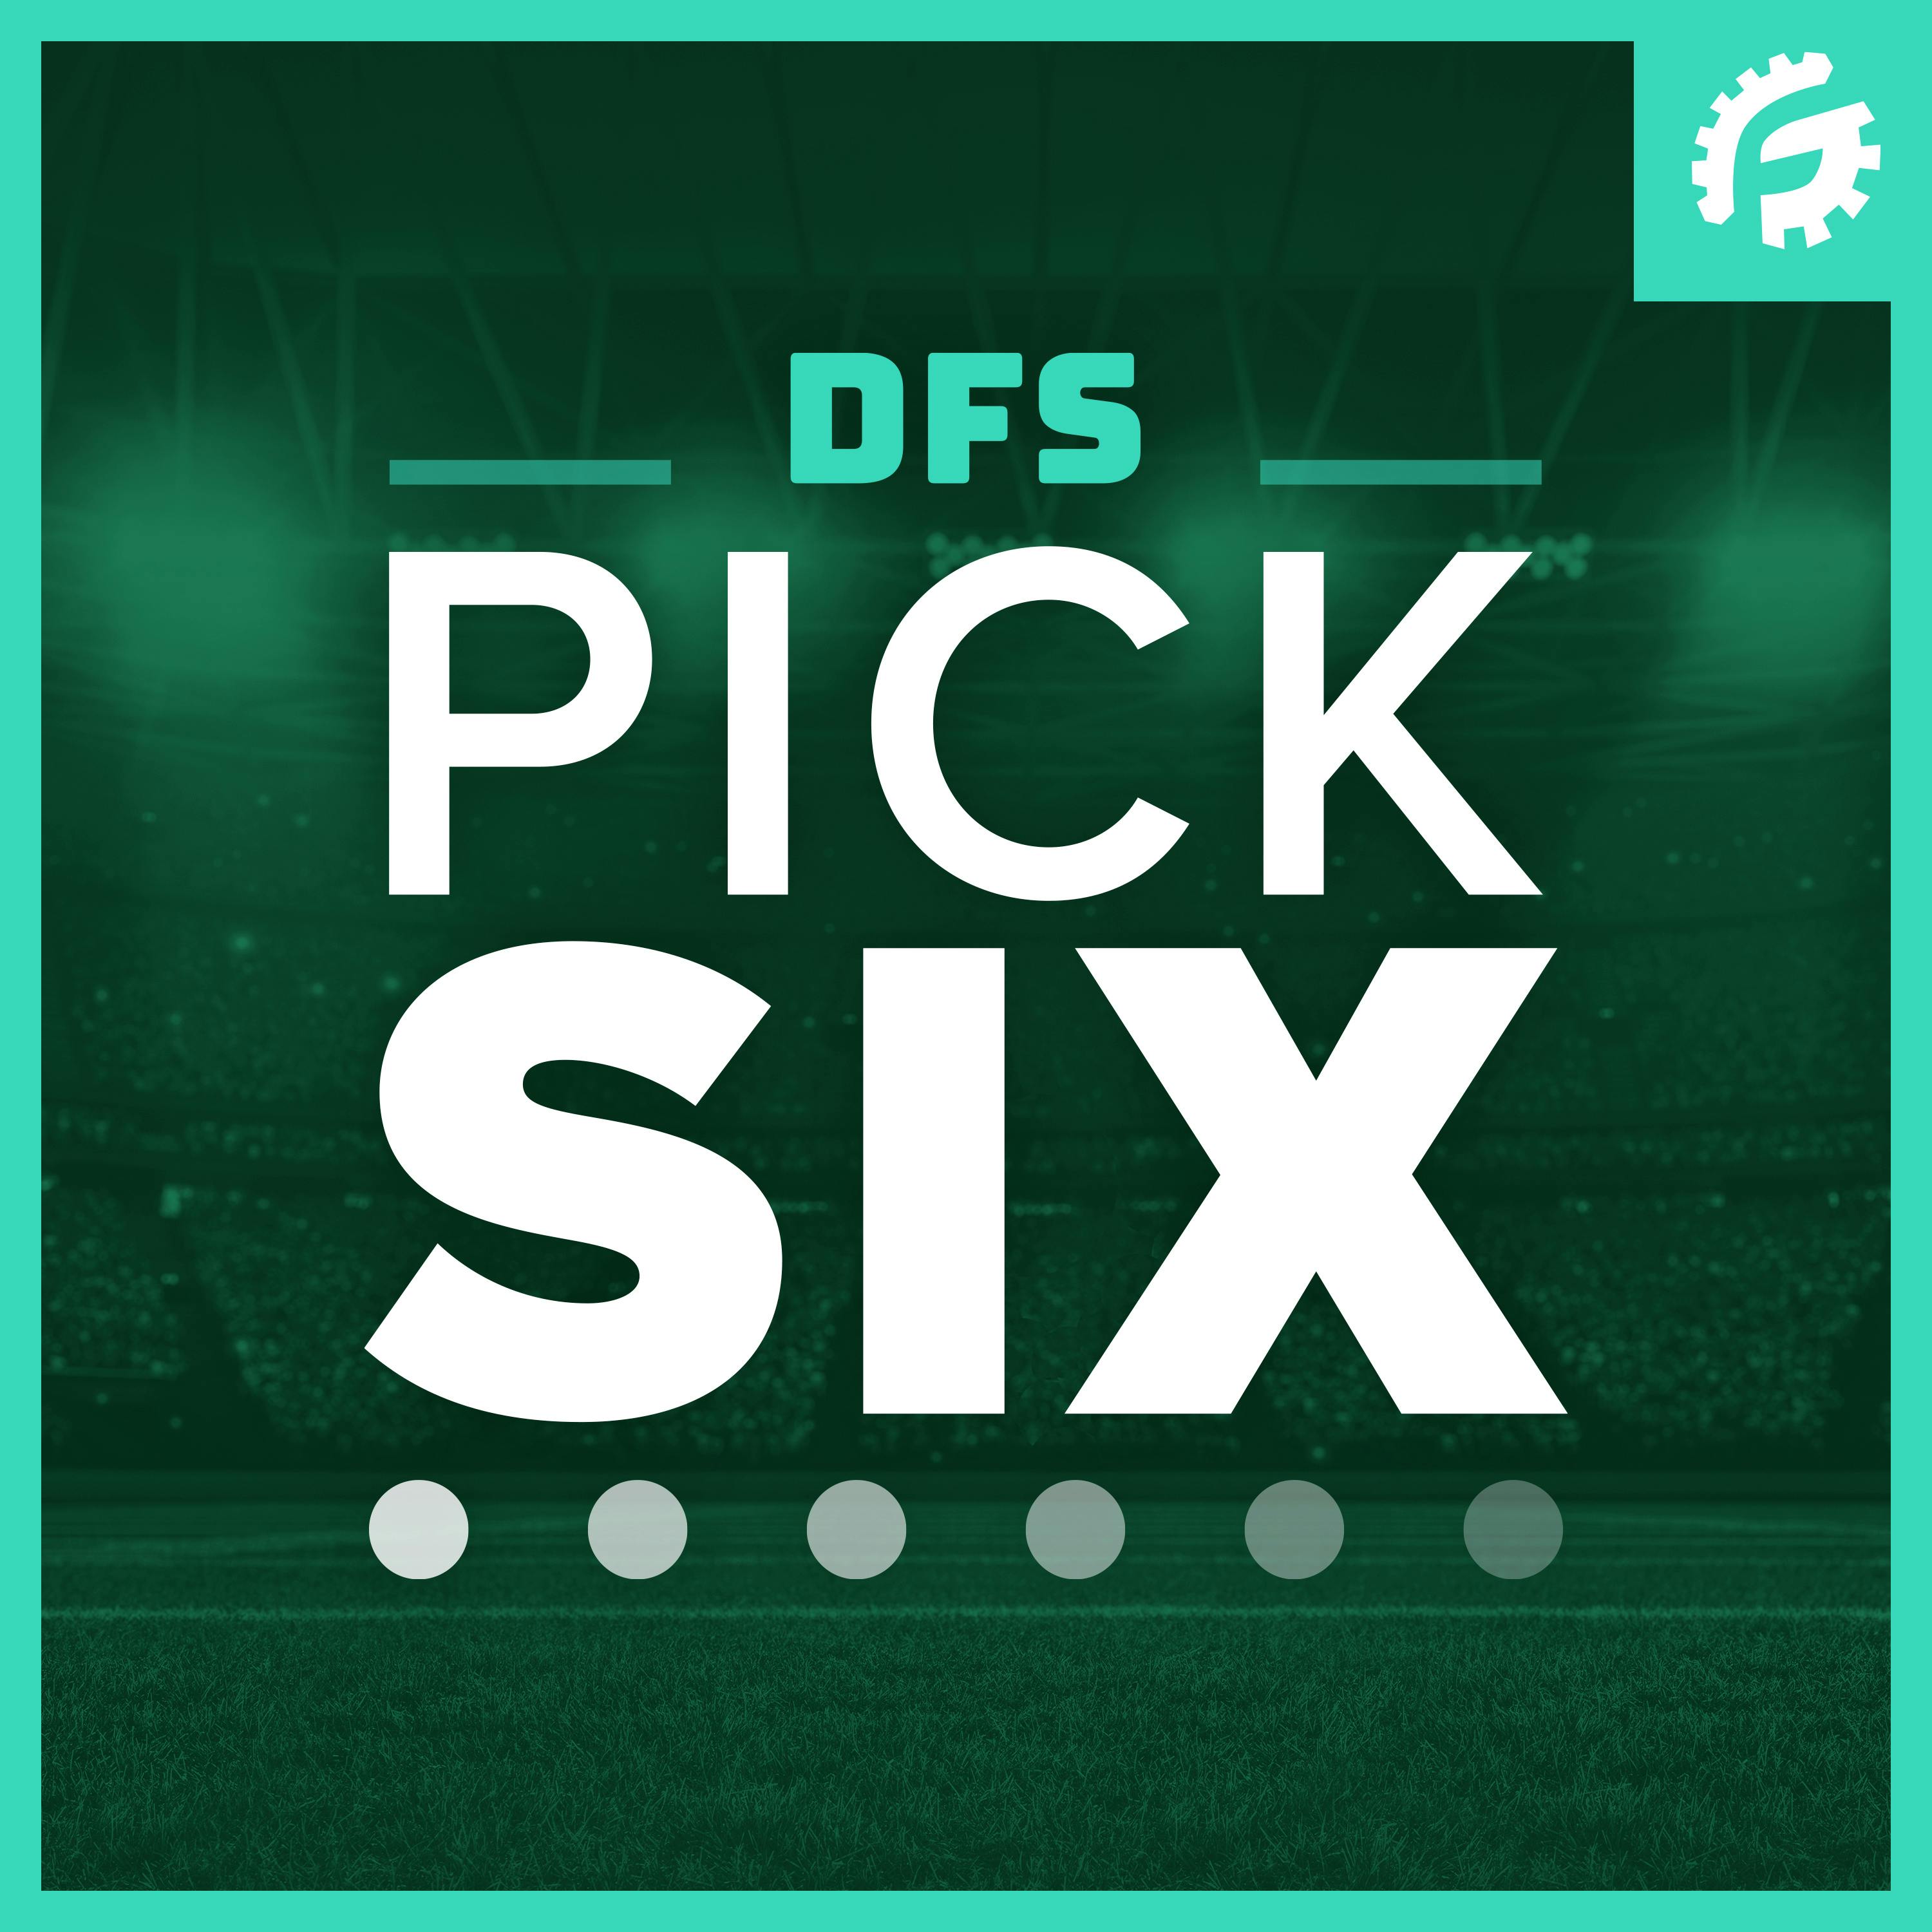 NFL DFS Pick 6 Show - Week 8